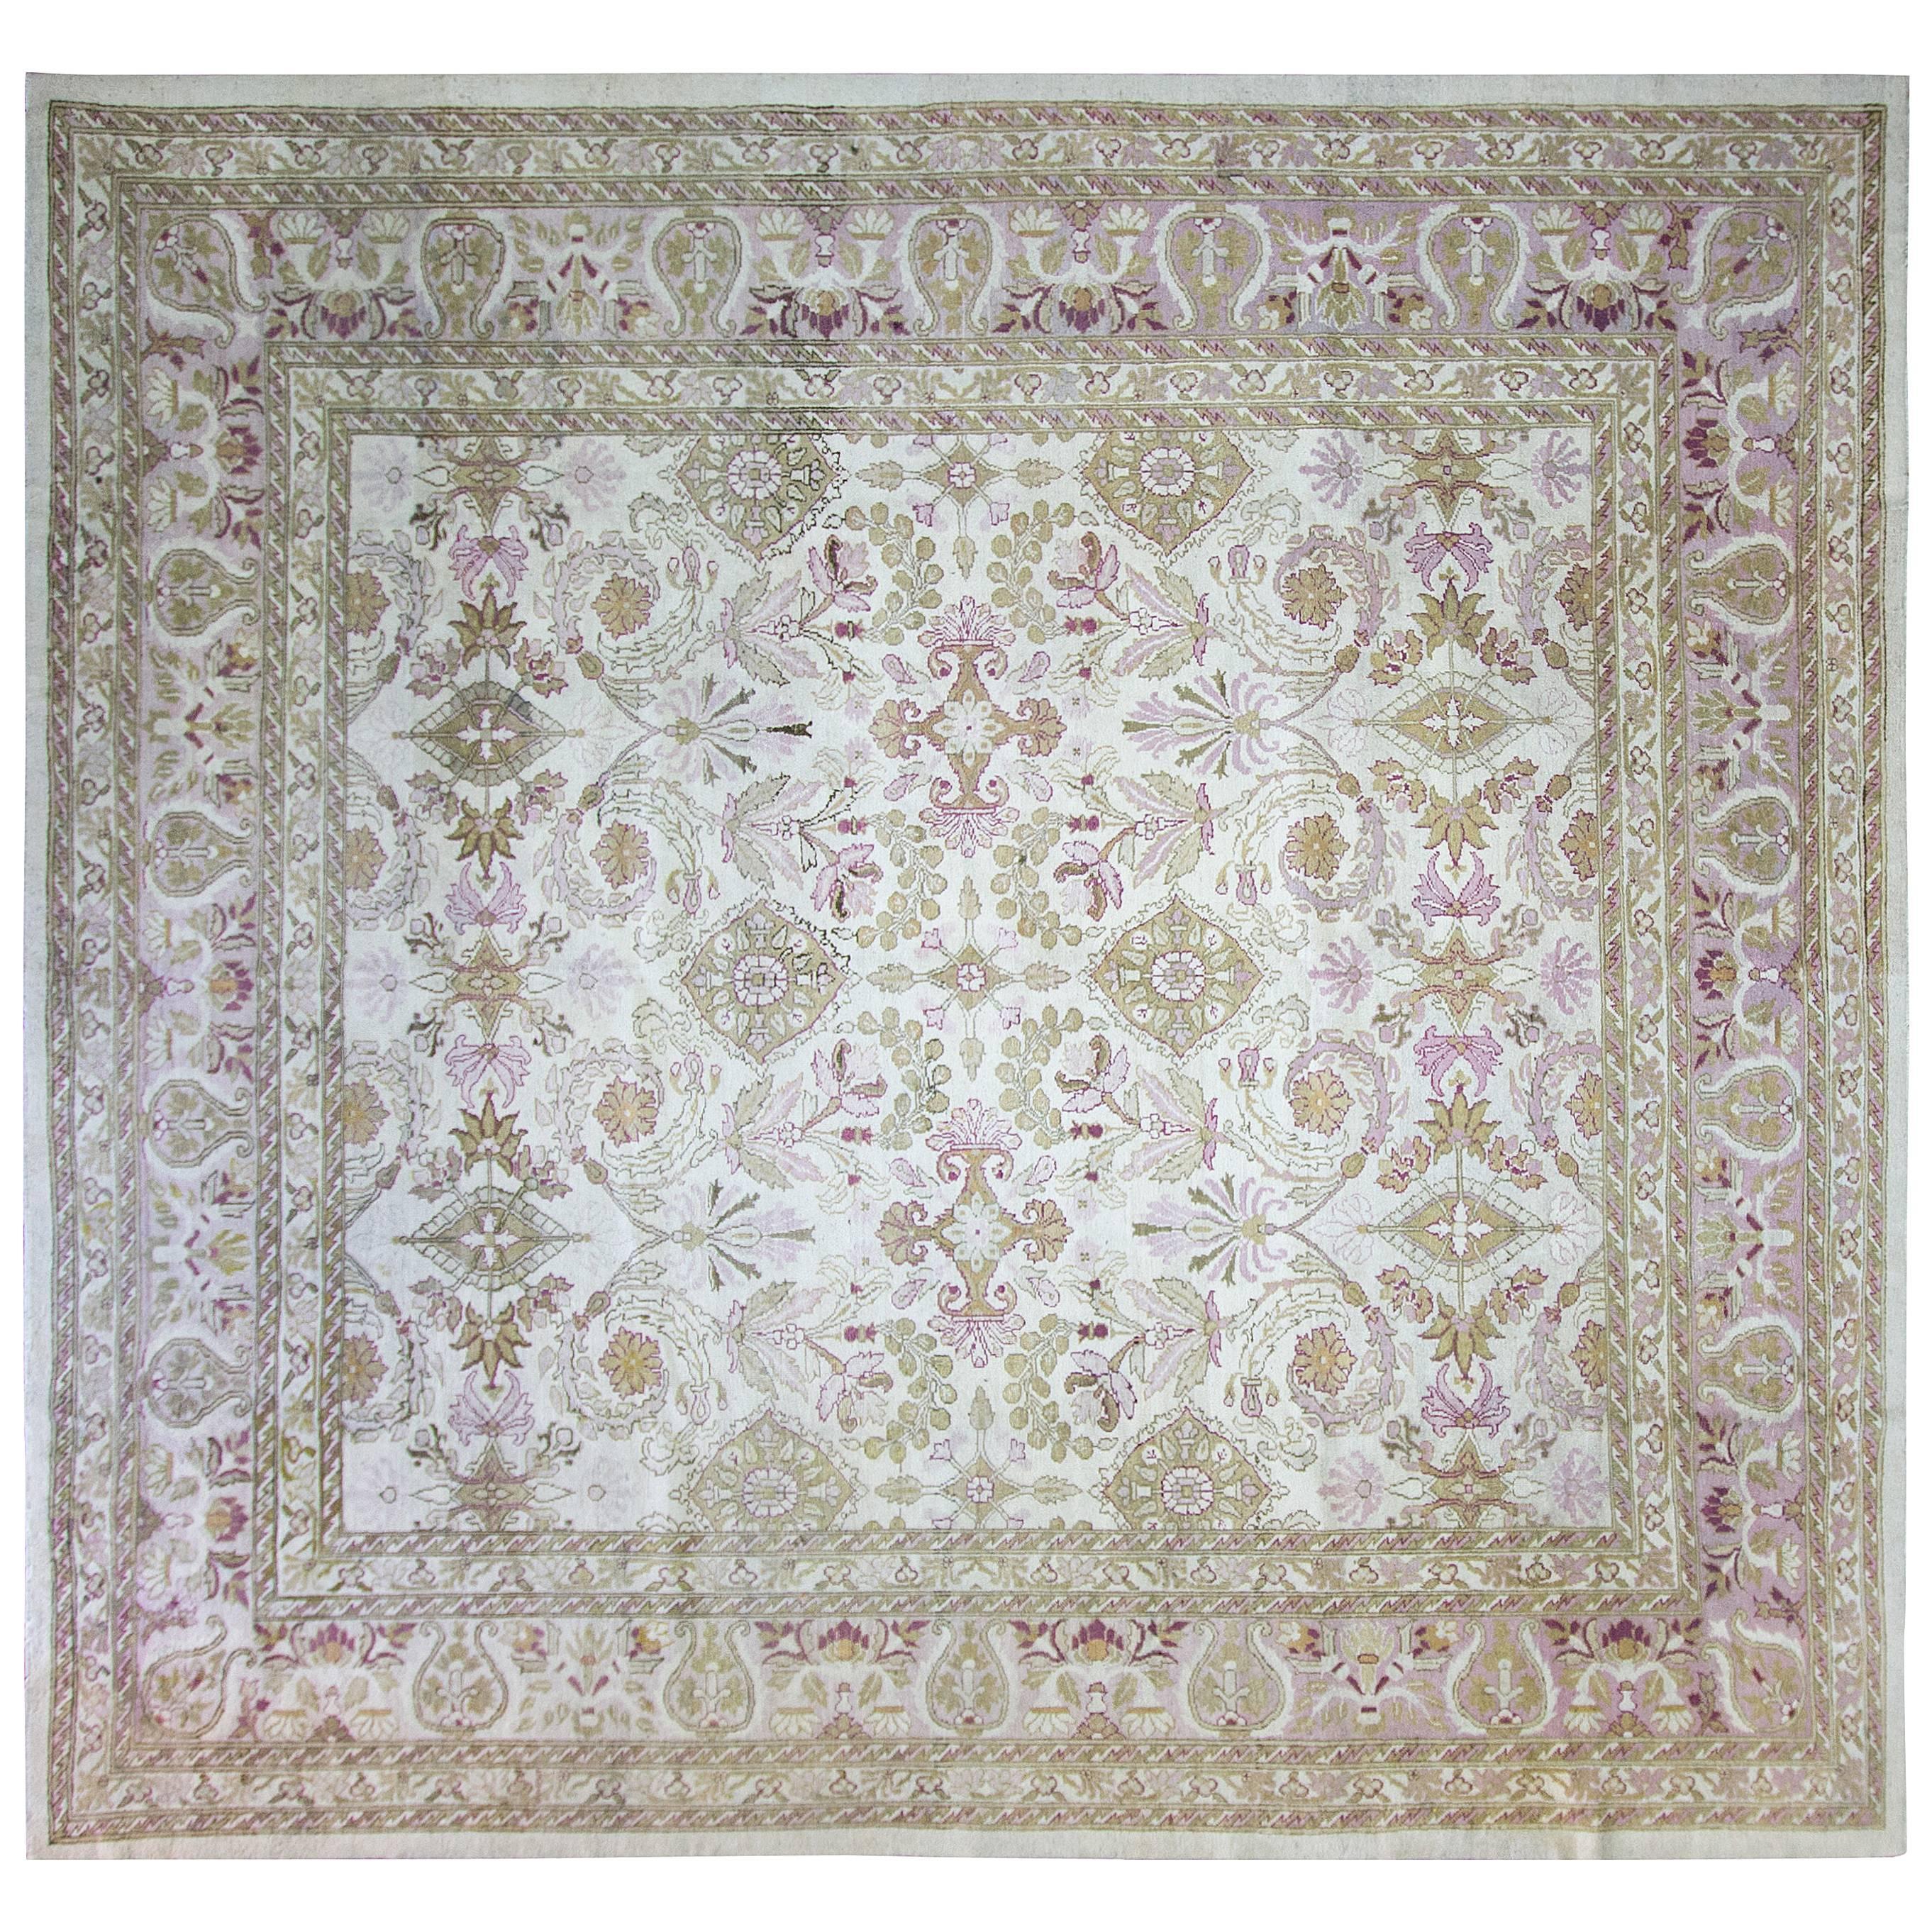 Antique Amritsar Agra Carpet